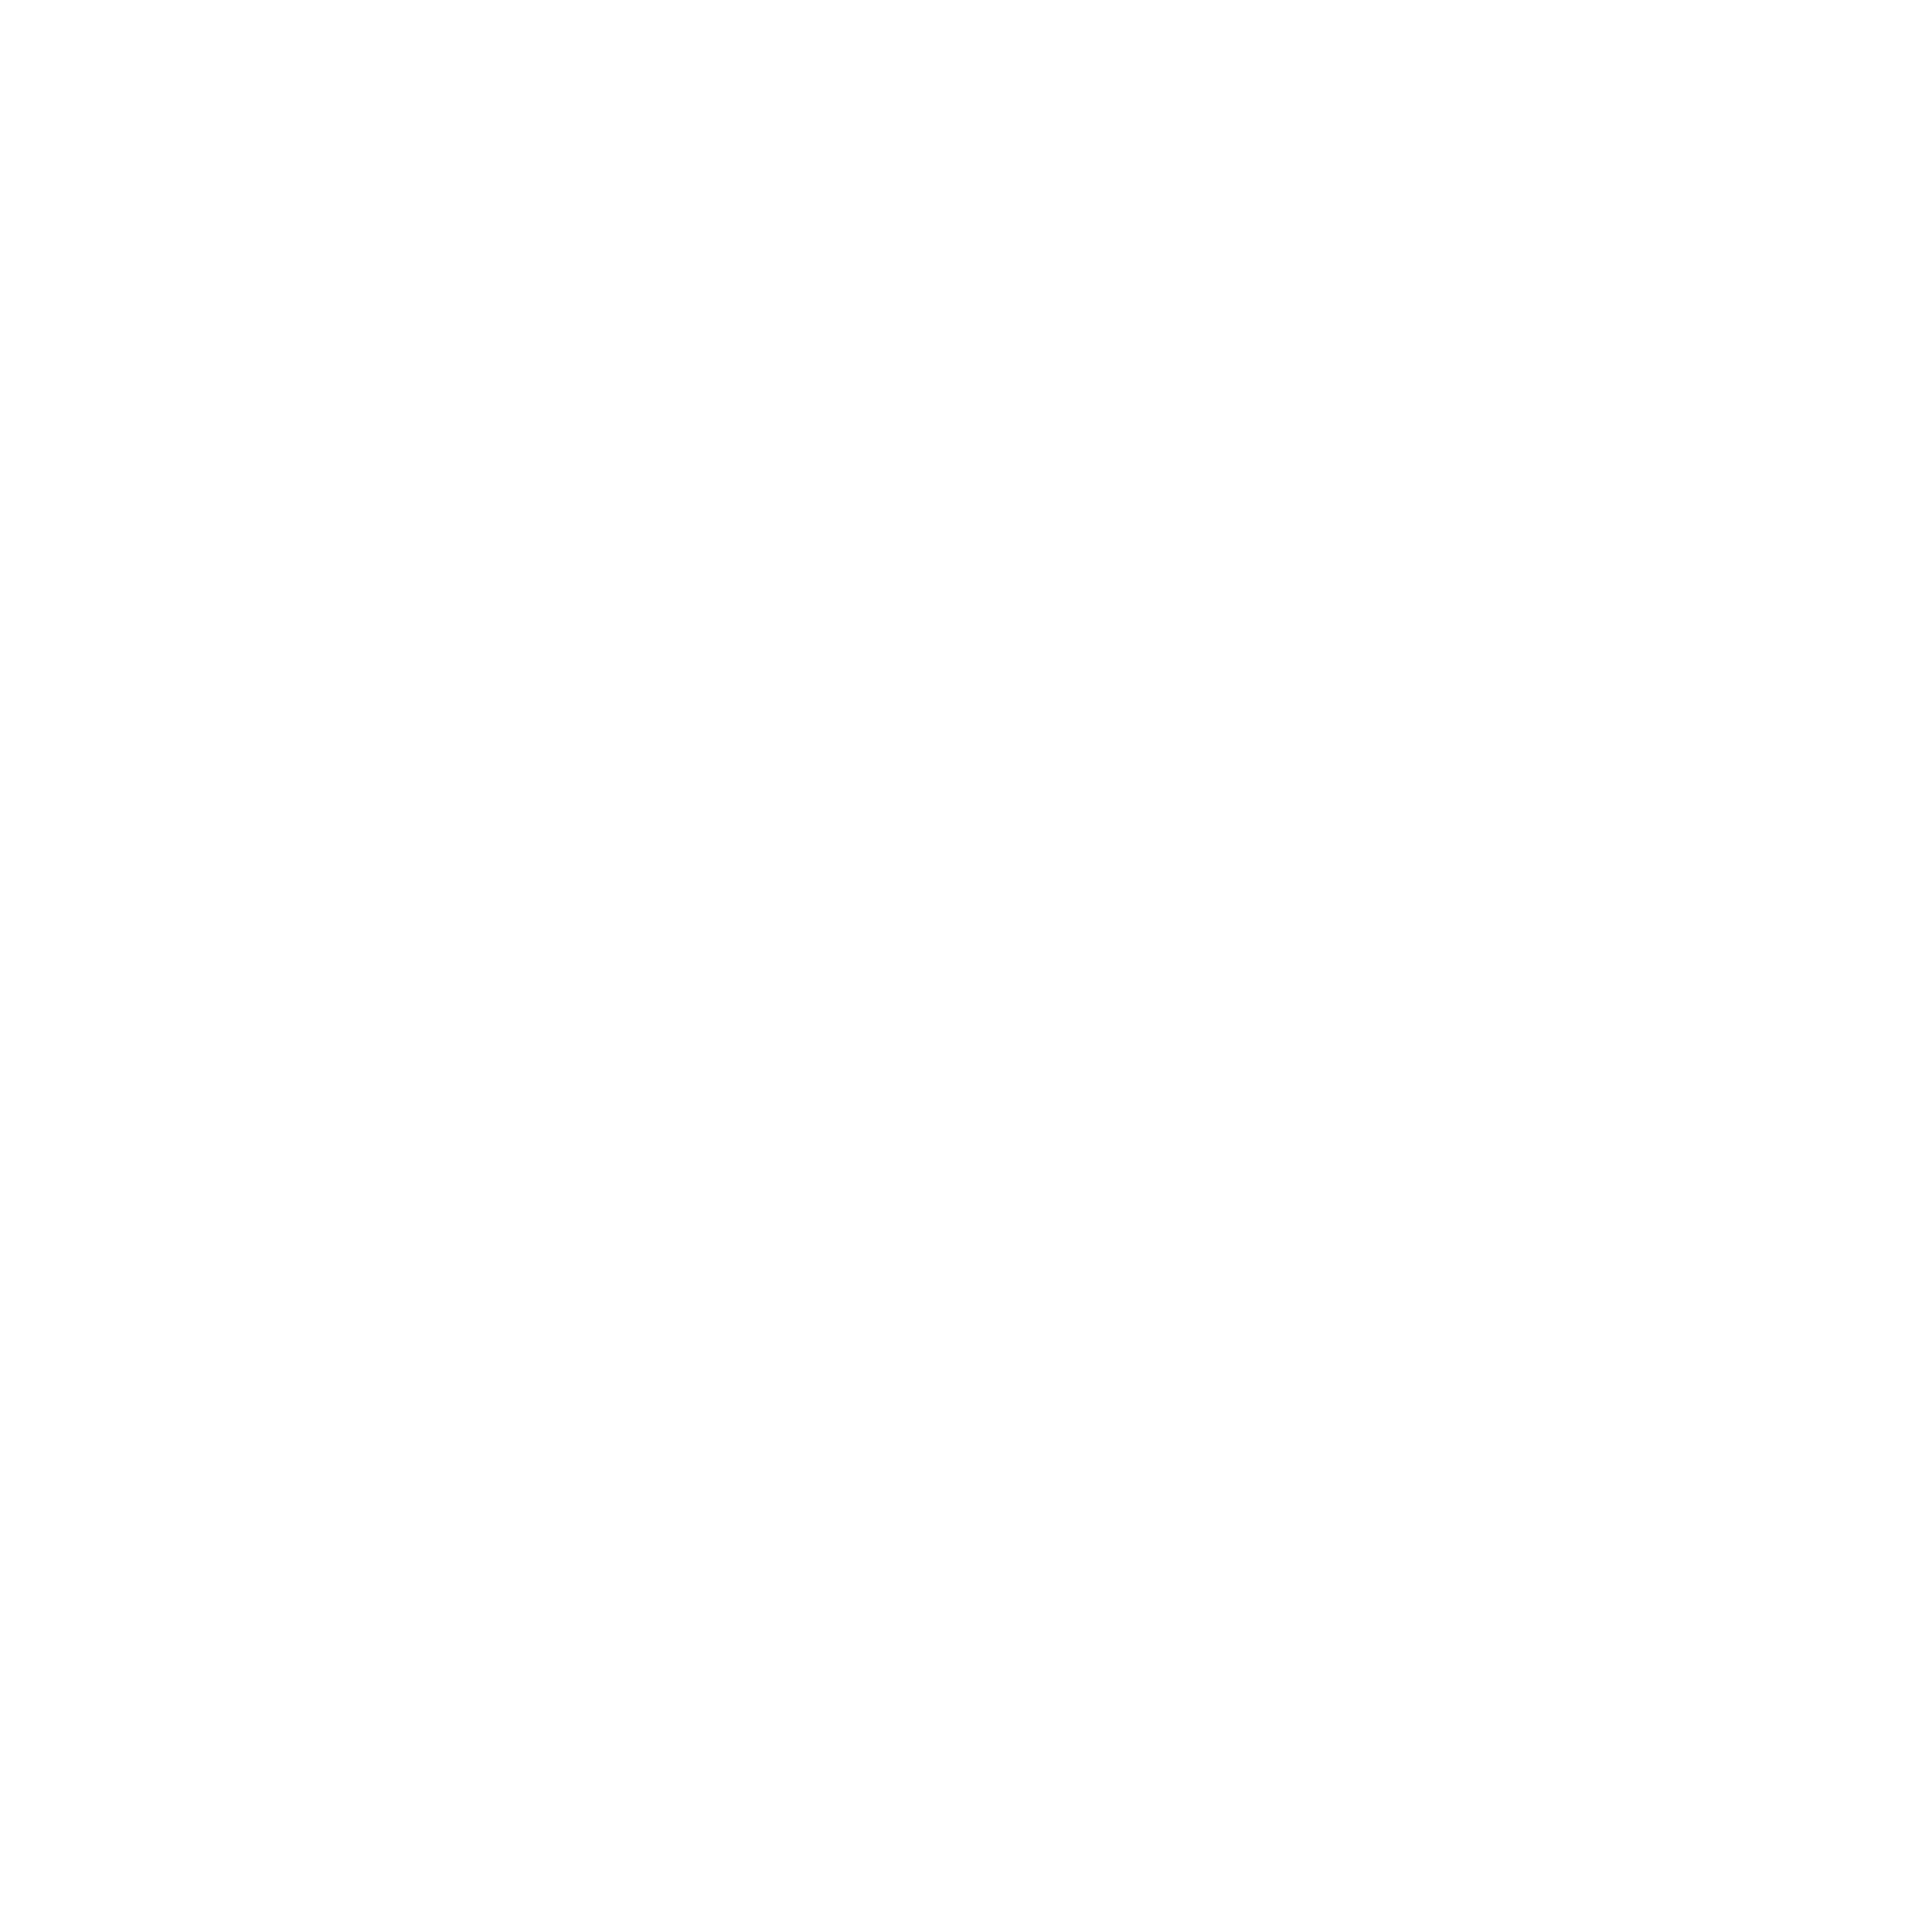 DuffleBox